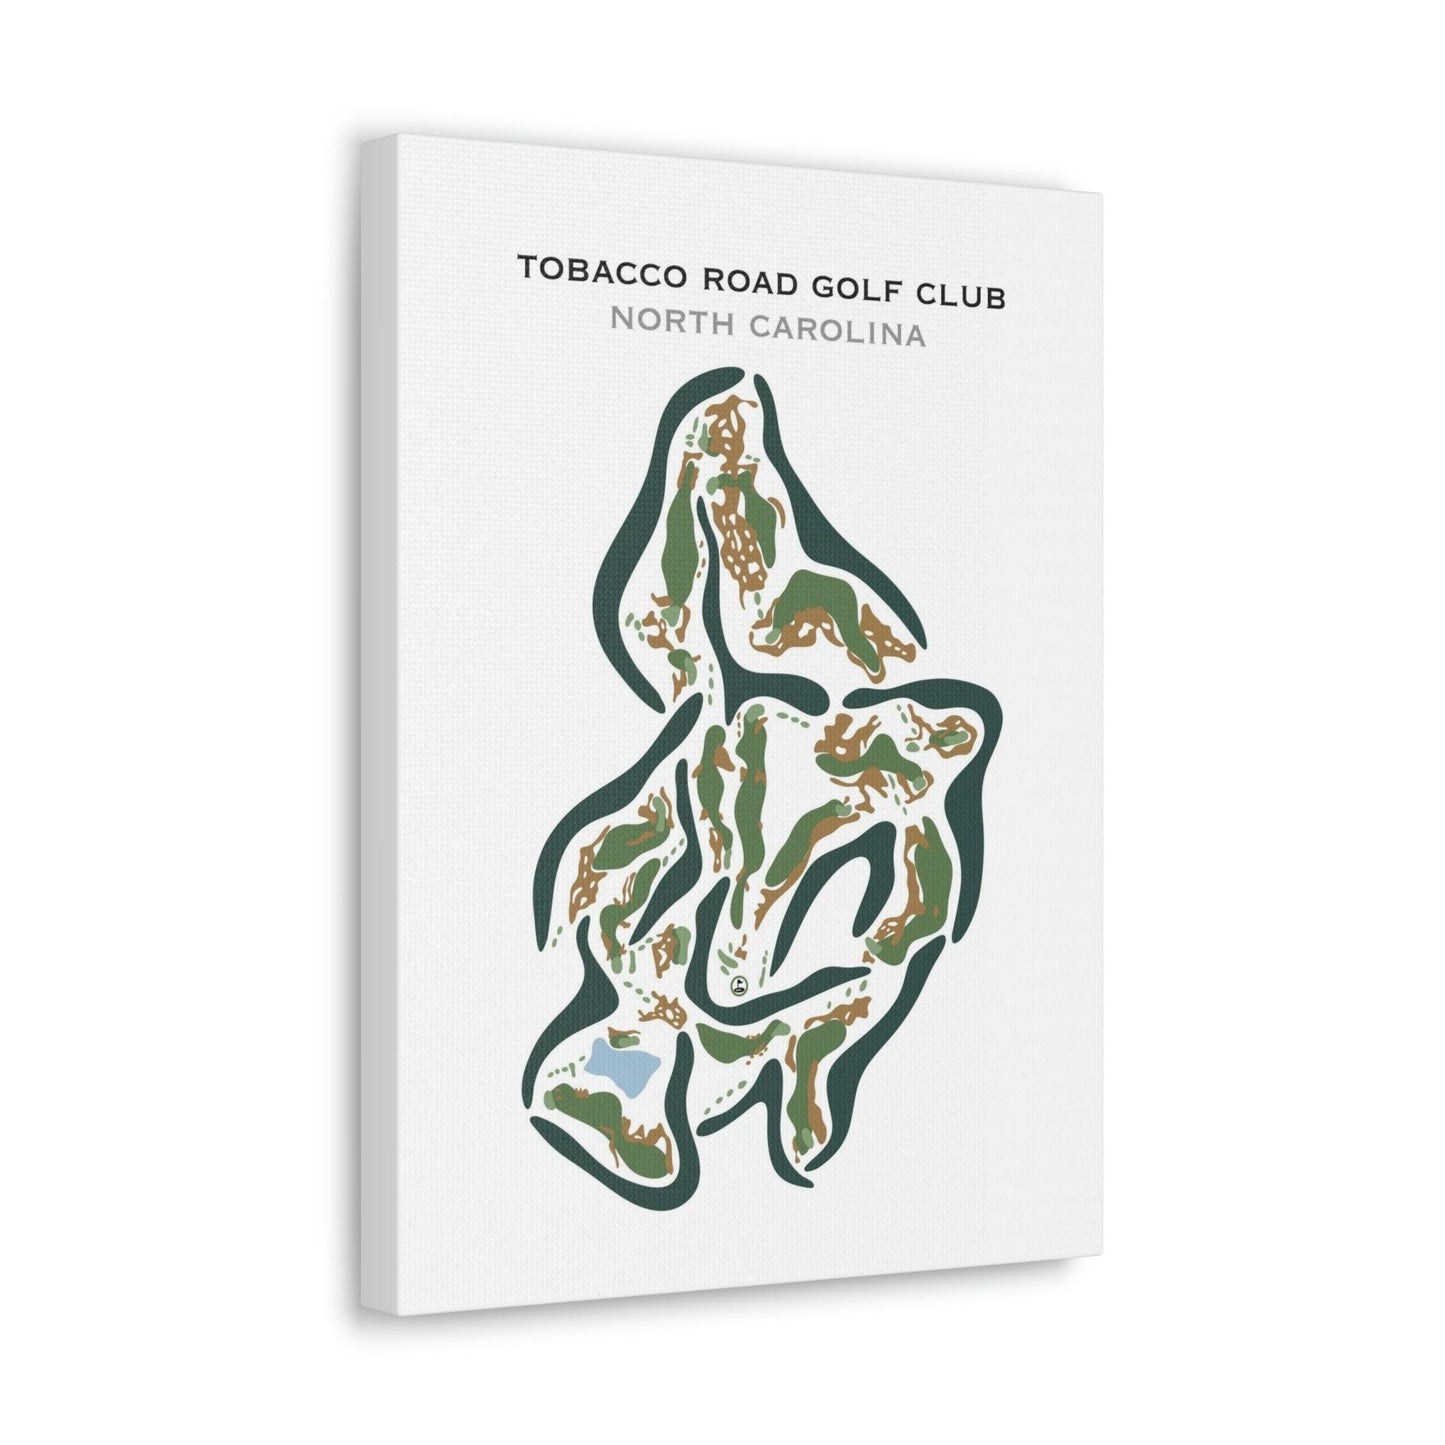 Tobacco Road Golf Club, North Carolina - Printed Golf Courses by Golf Course Prints